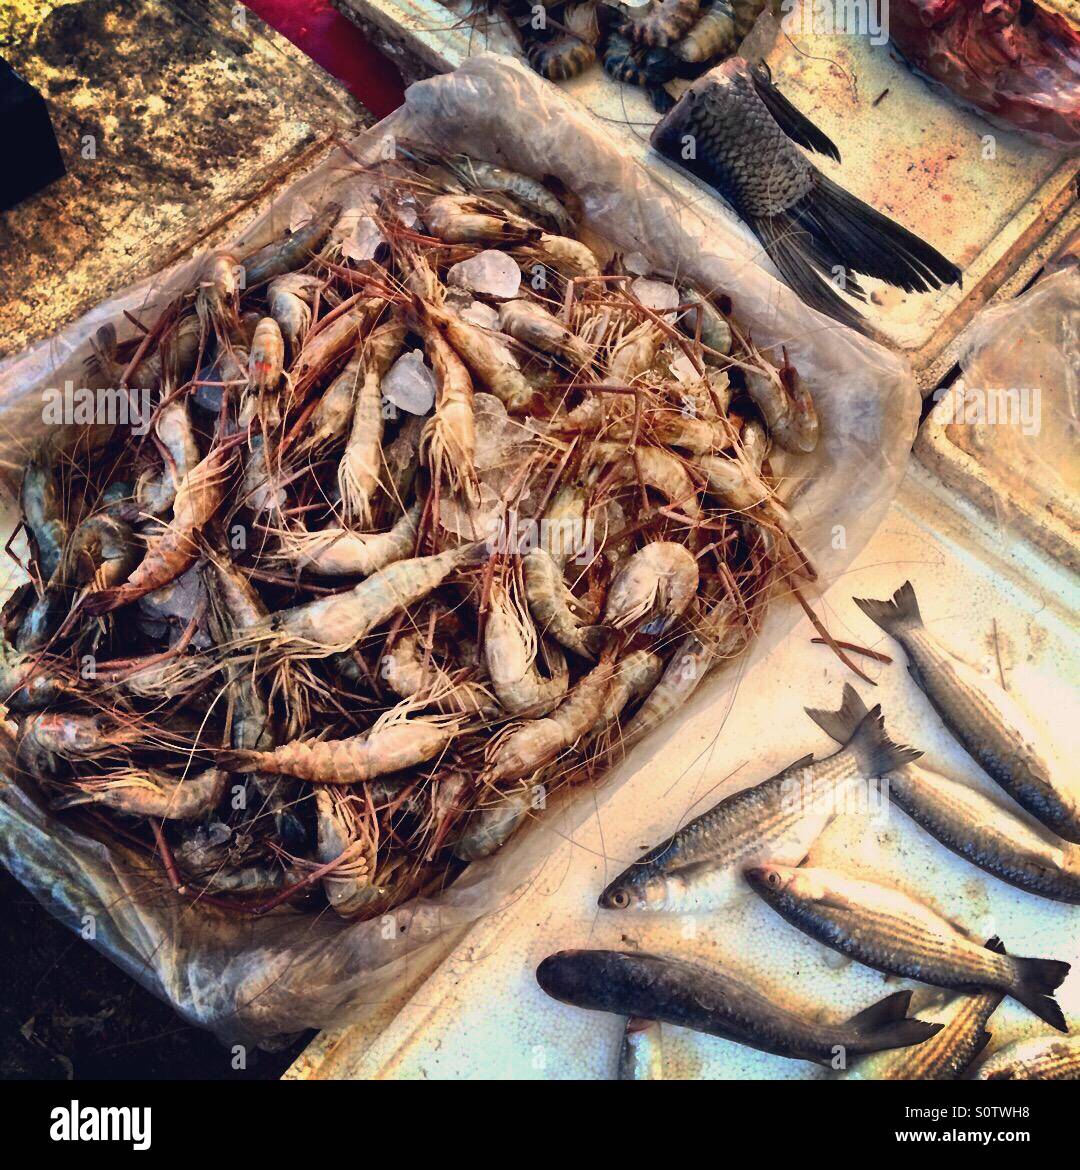 Fish market on India Stock Photo